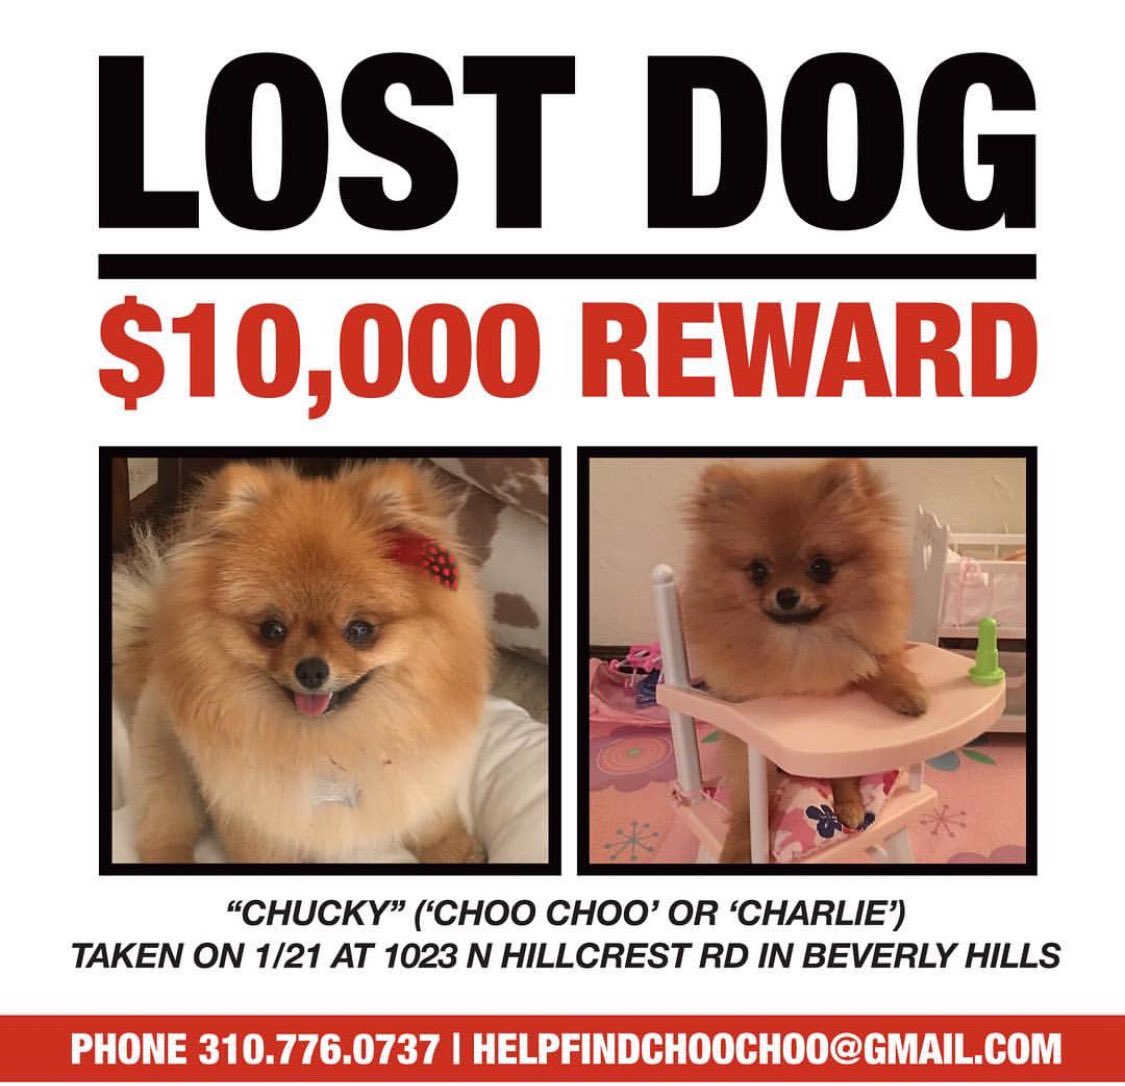 RT @NickyHilton: Reward for lost dog ???? #BeverlyHills https://t.co/8OTZxmUpwJ